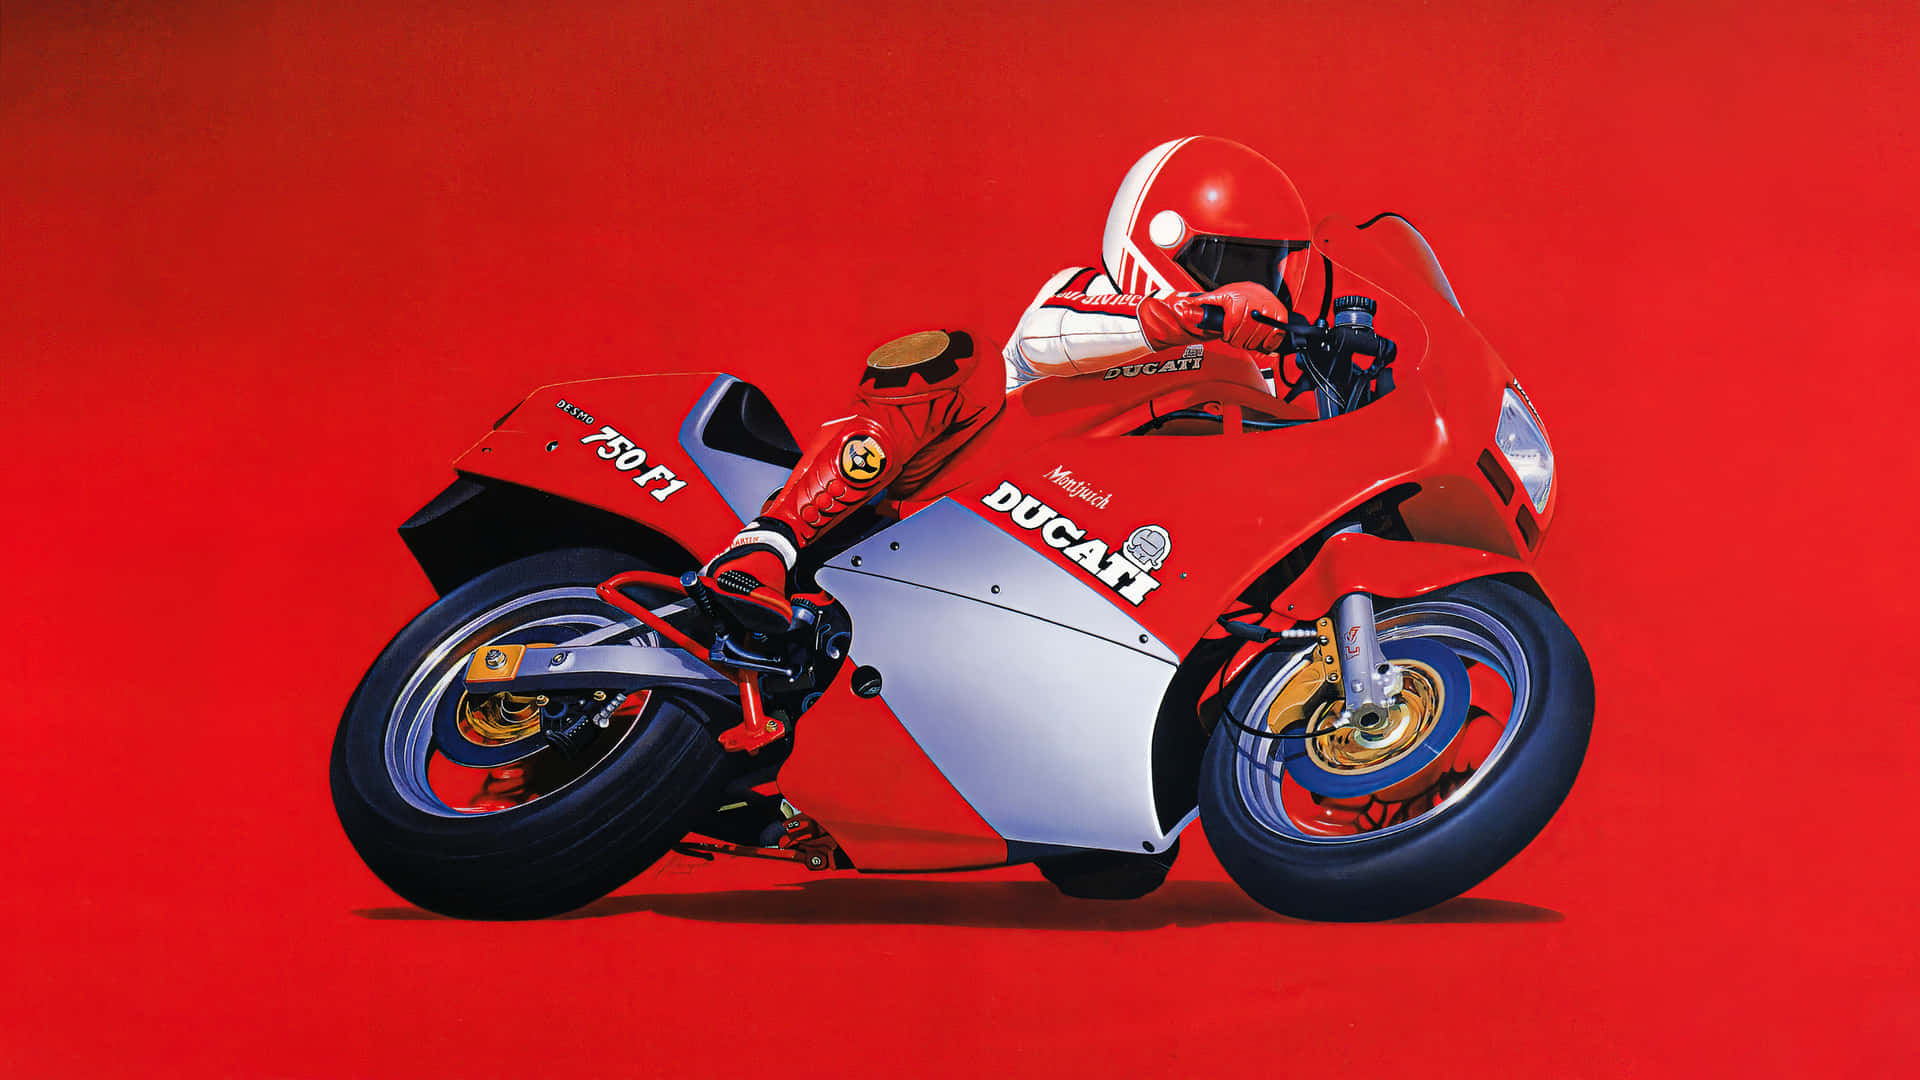 2560x1440 Ducati Motorcycle Wallpaper